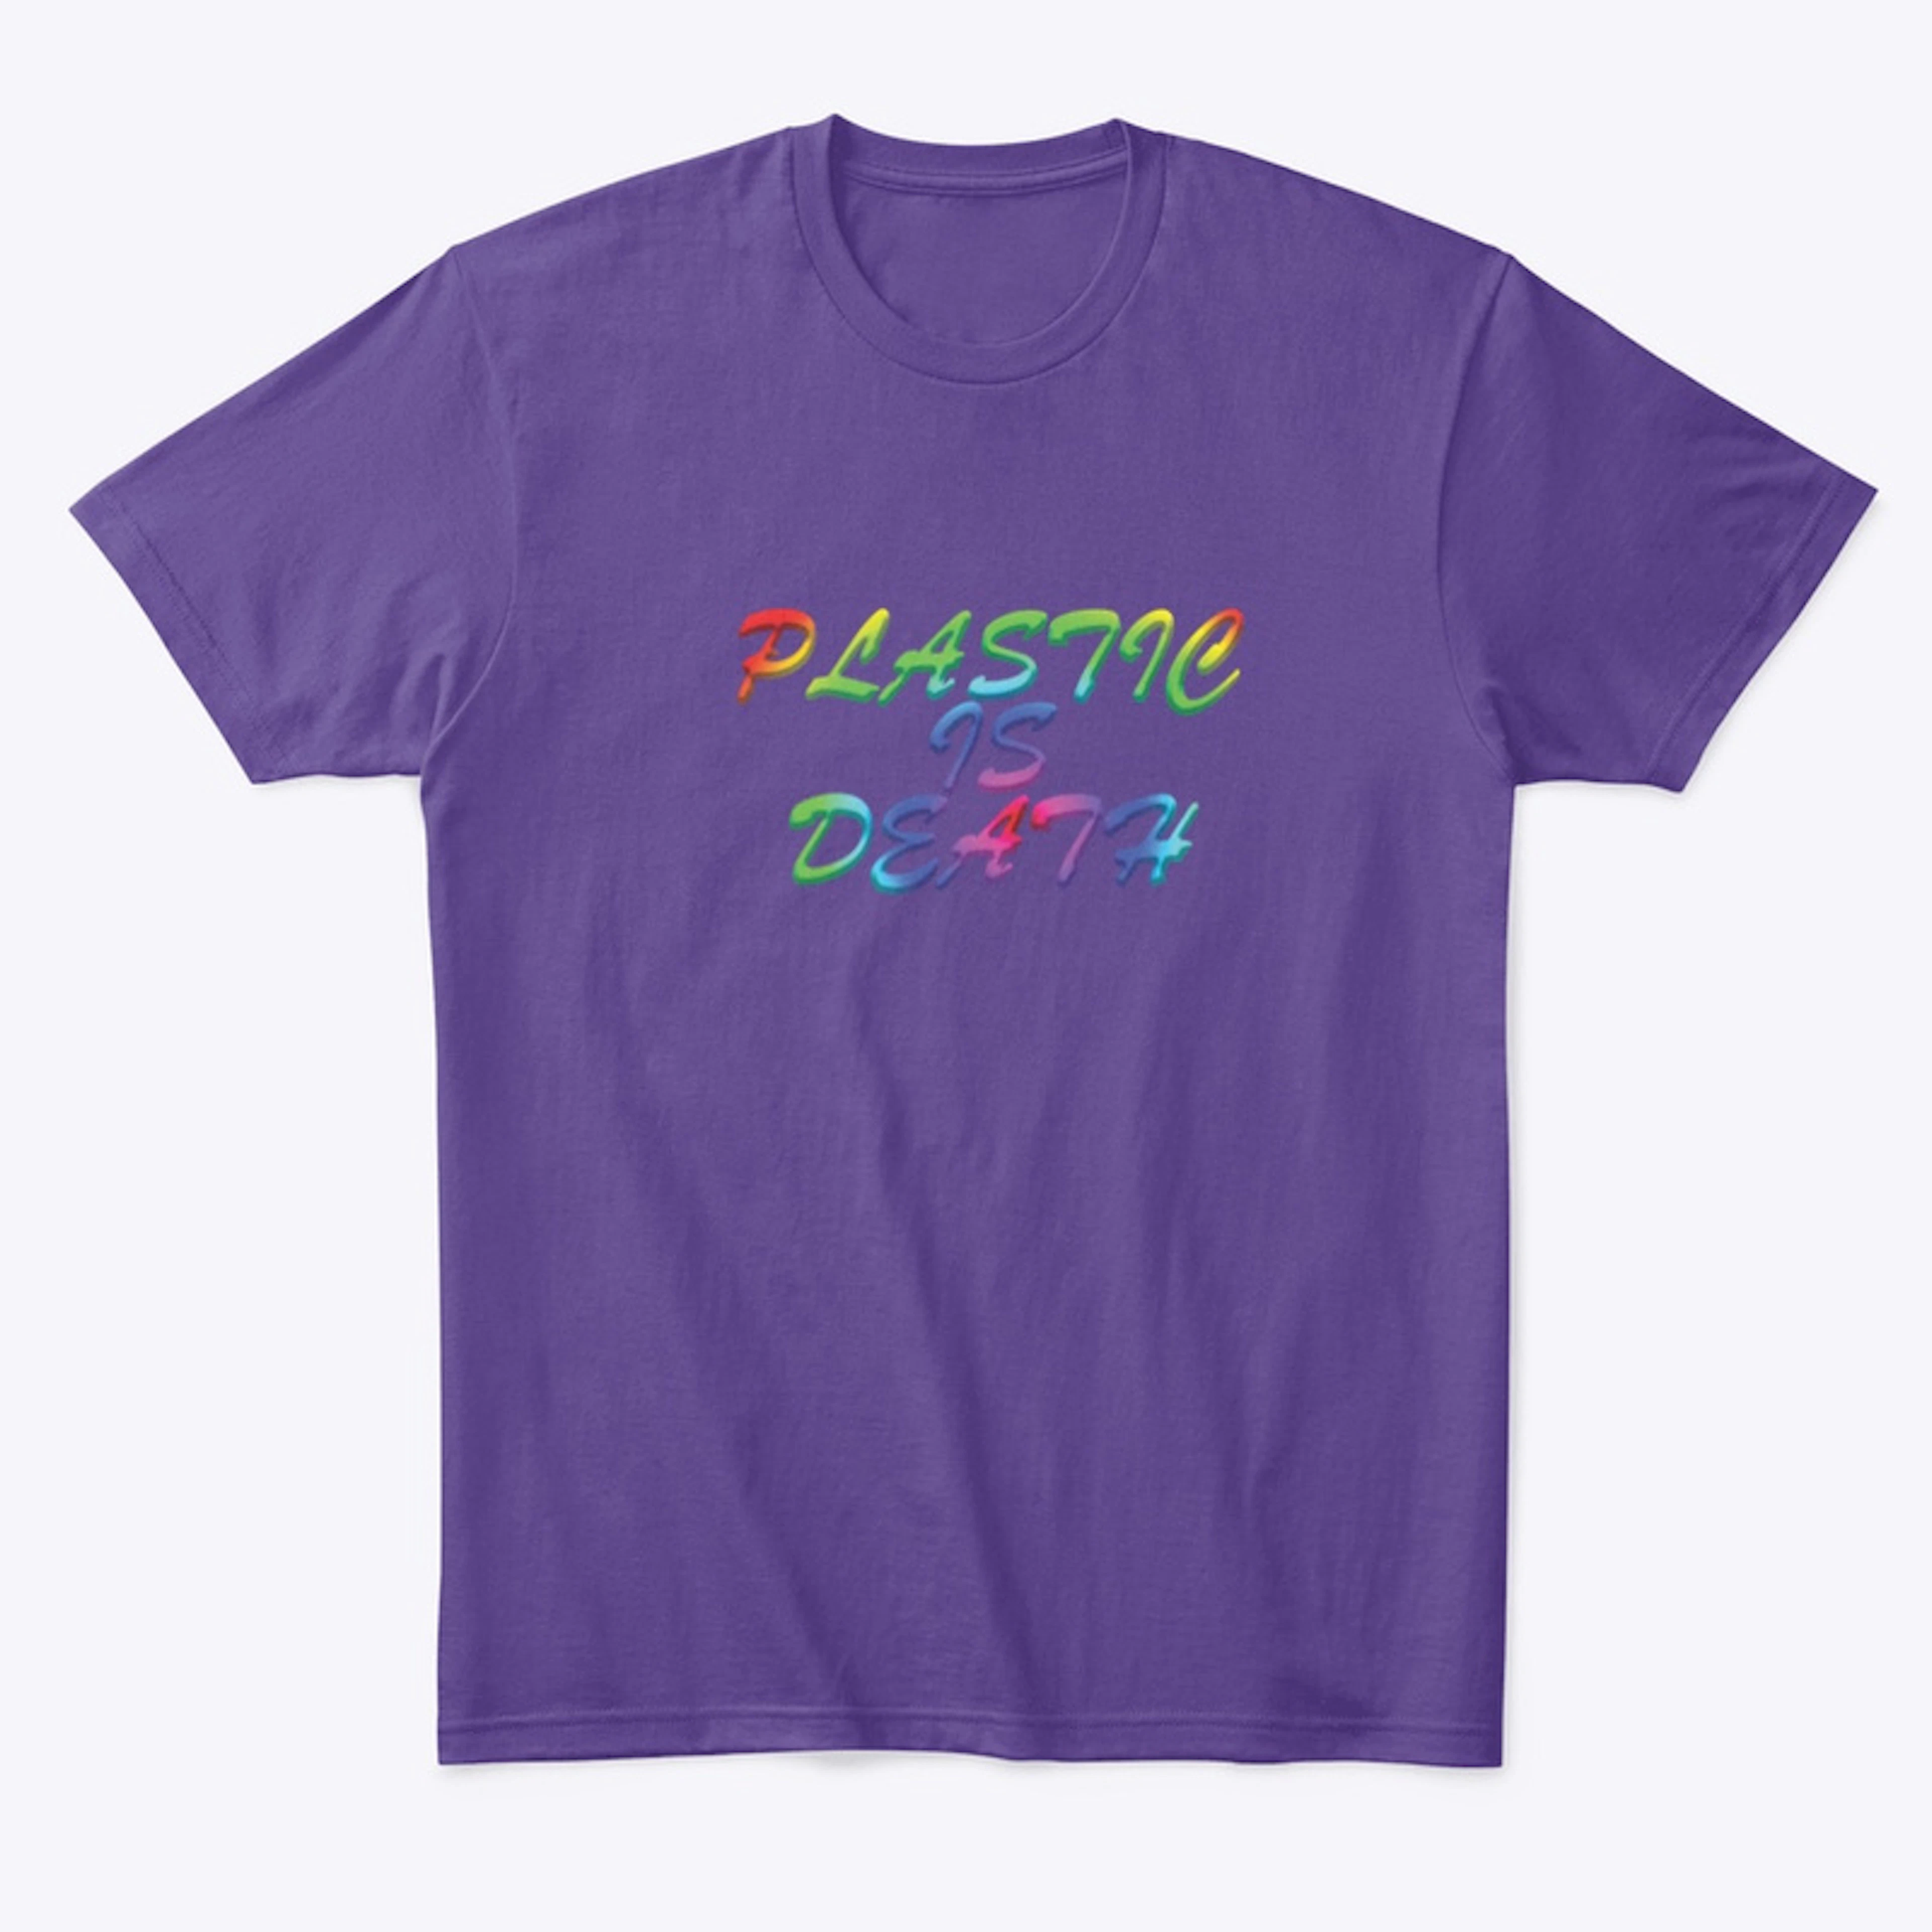 Plastic Is Death